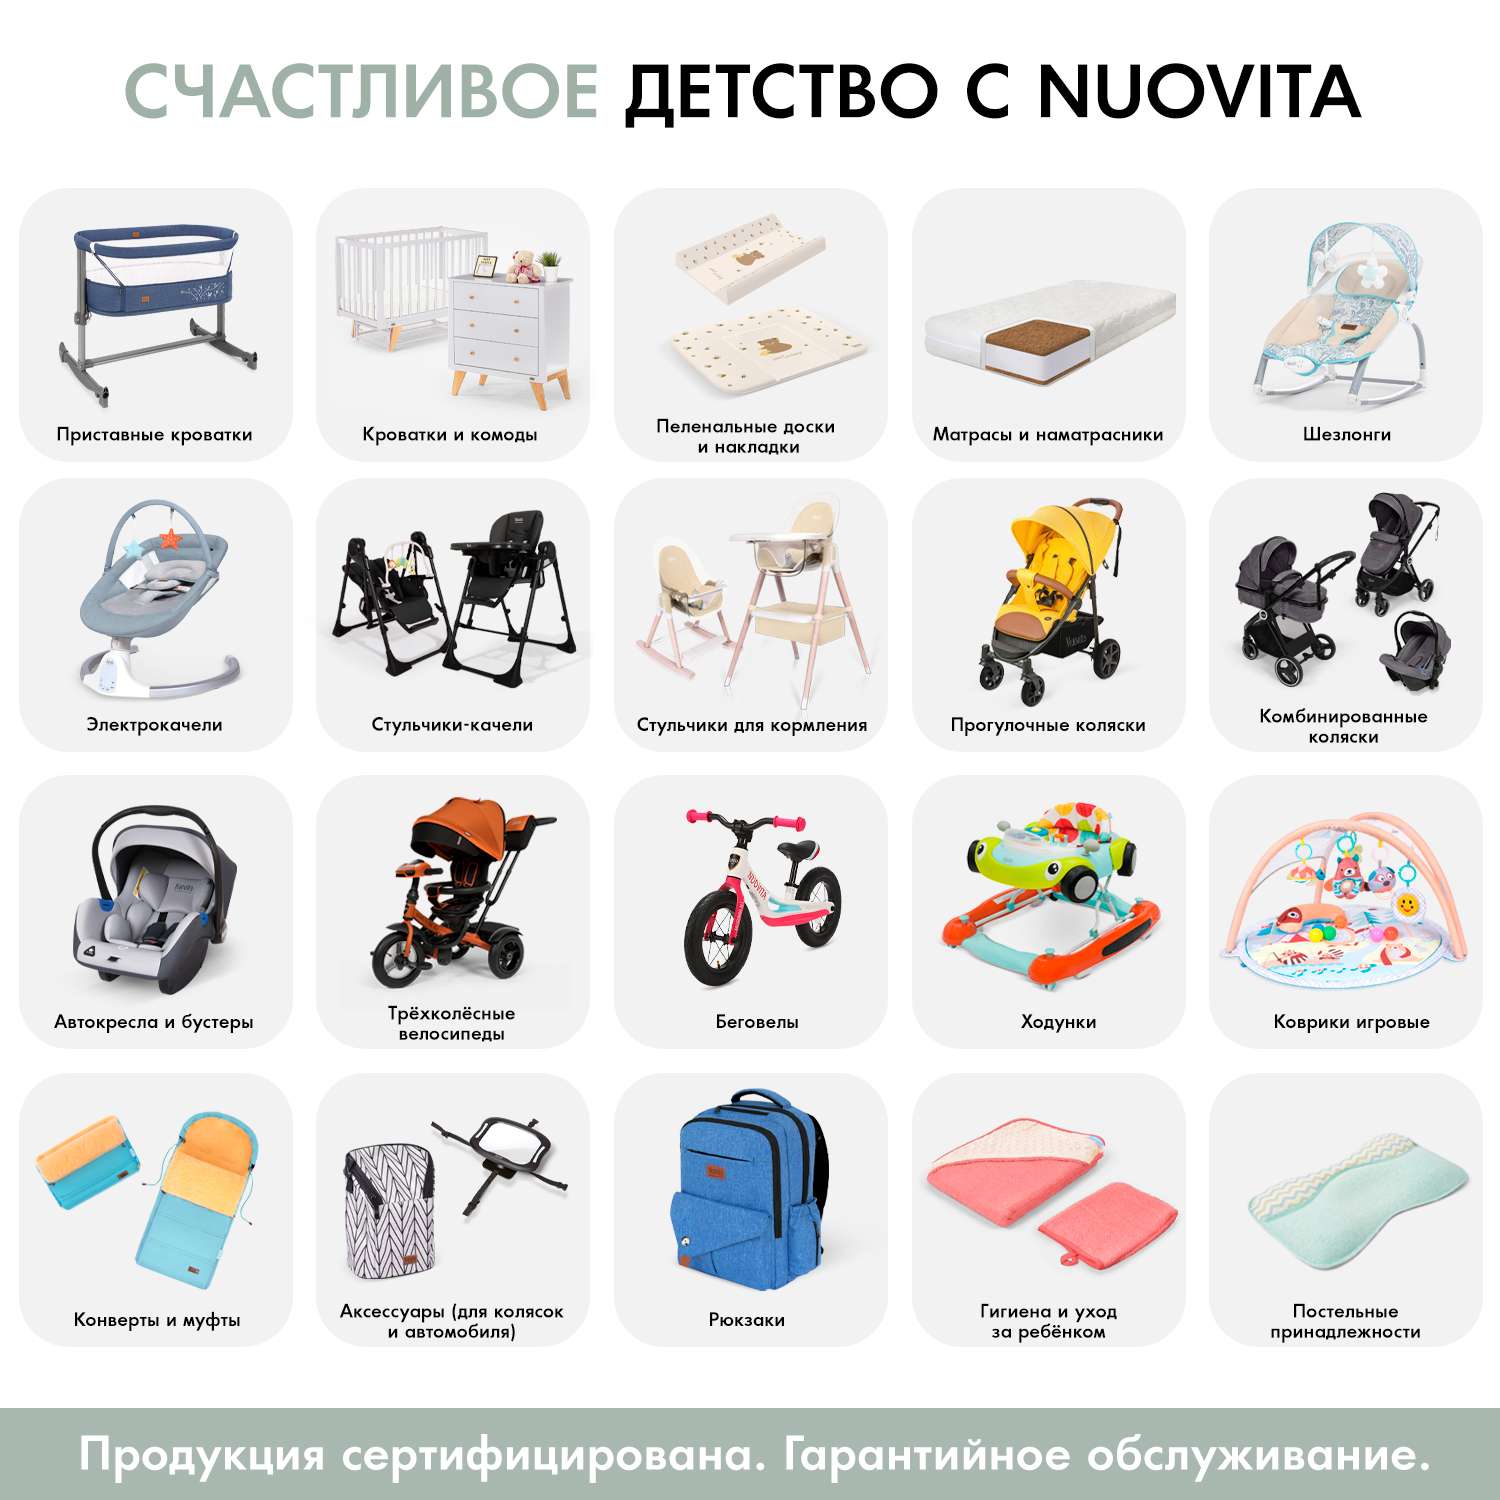 Подушка для новорожденного Nuovita Neonutti Trio Dipinto Звезды розовая - фото 12